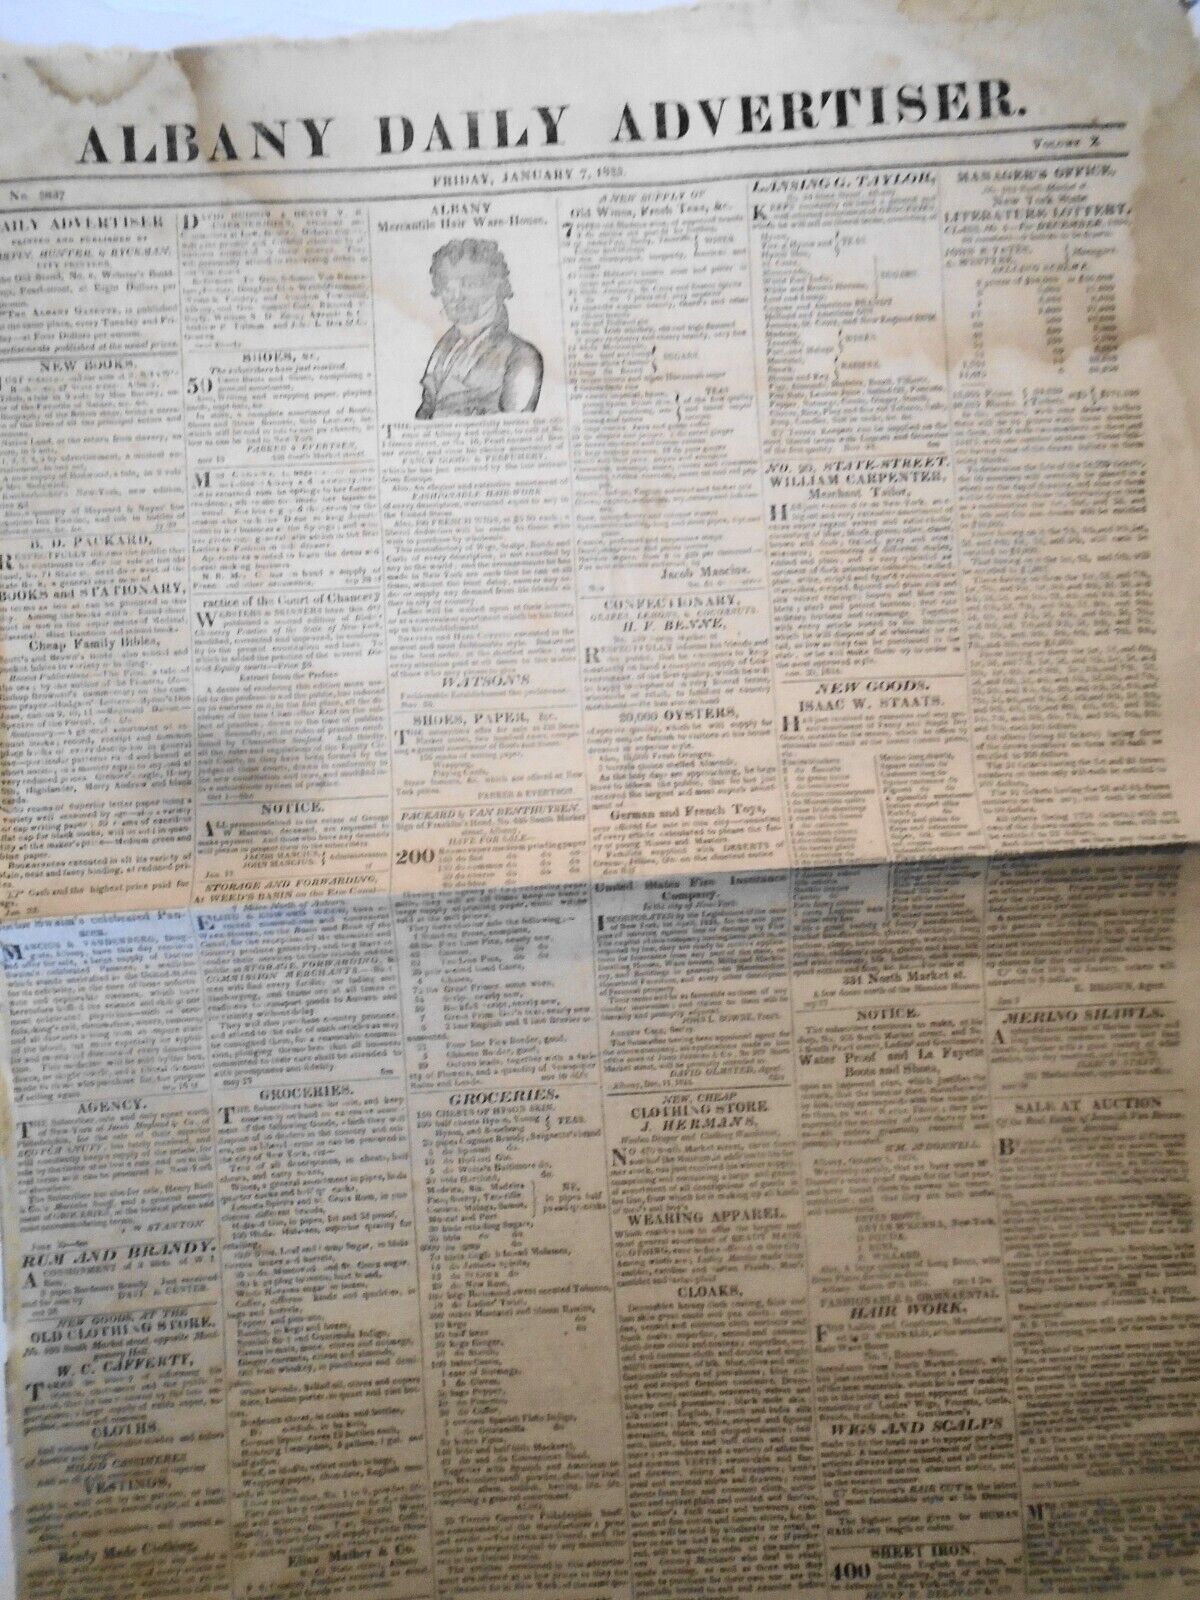 Albany Daily Advertiser January 7, 1825. New York Governor DeWitt Clinton\'s copy